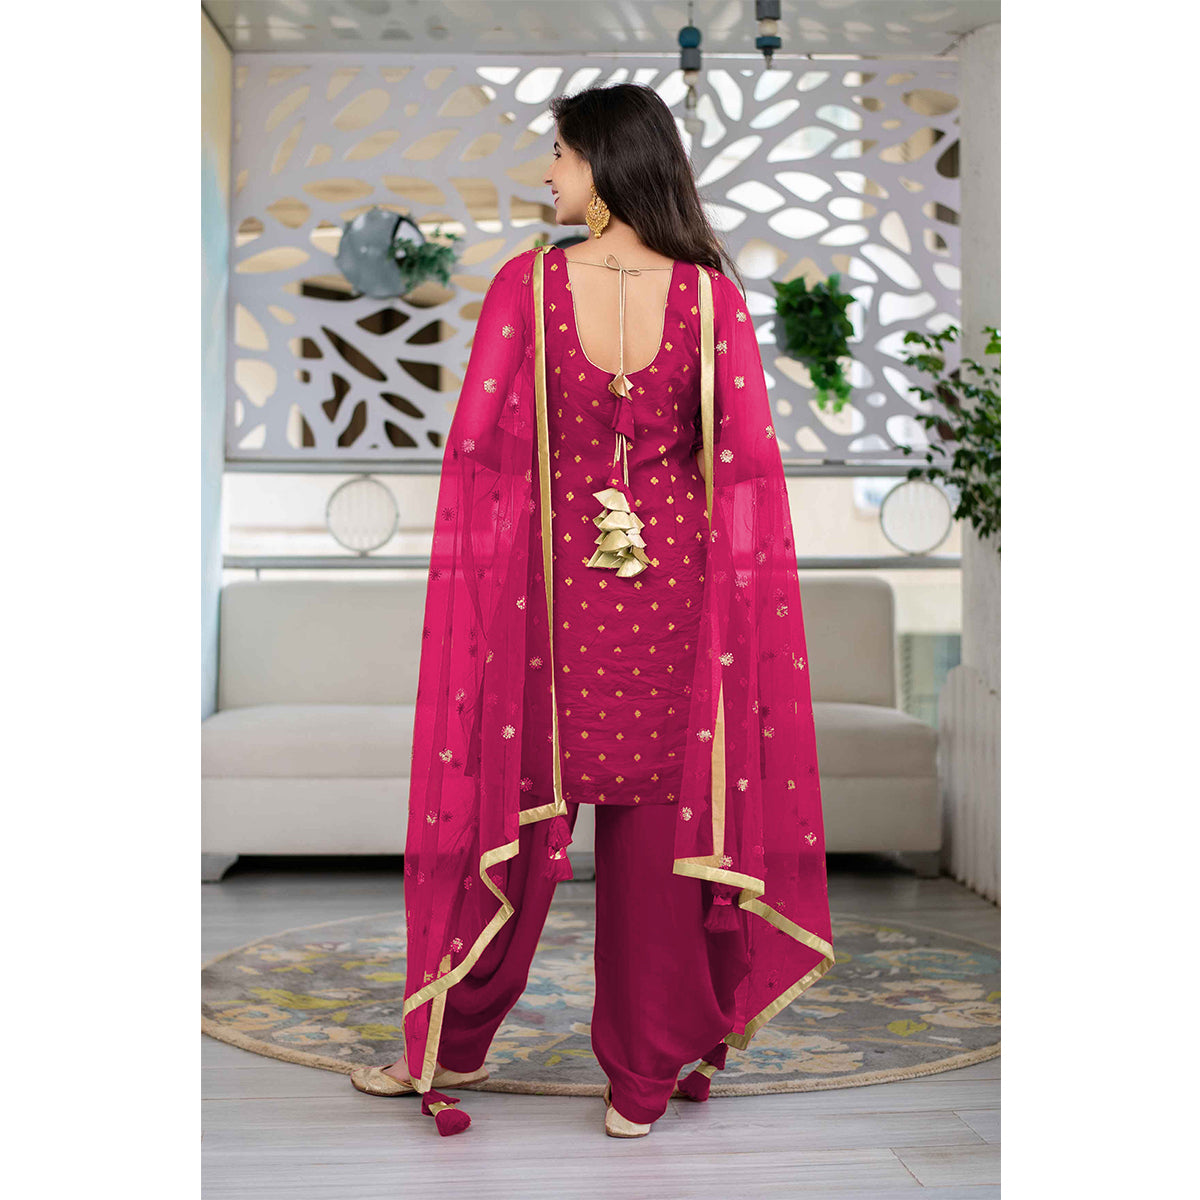 Buy Drashti Dhami Rani color georgette party wear anarkali kameez in UK,  USA and Canada | Simple pakistani dresses, Indian fashion, Fashion